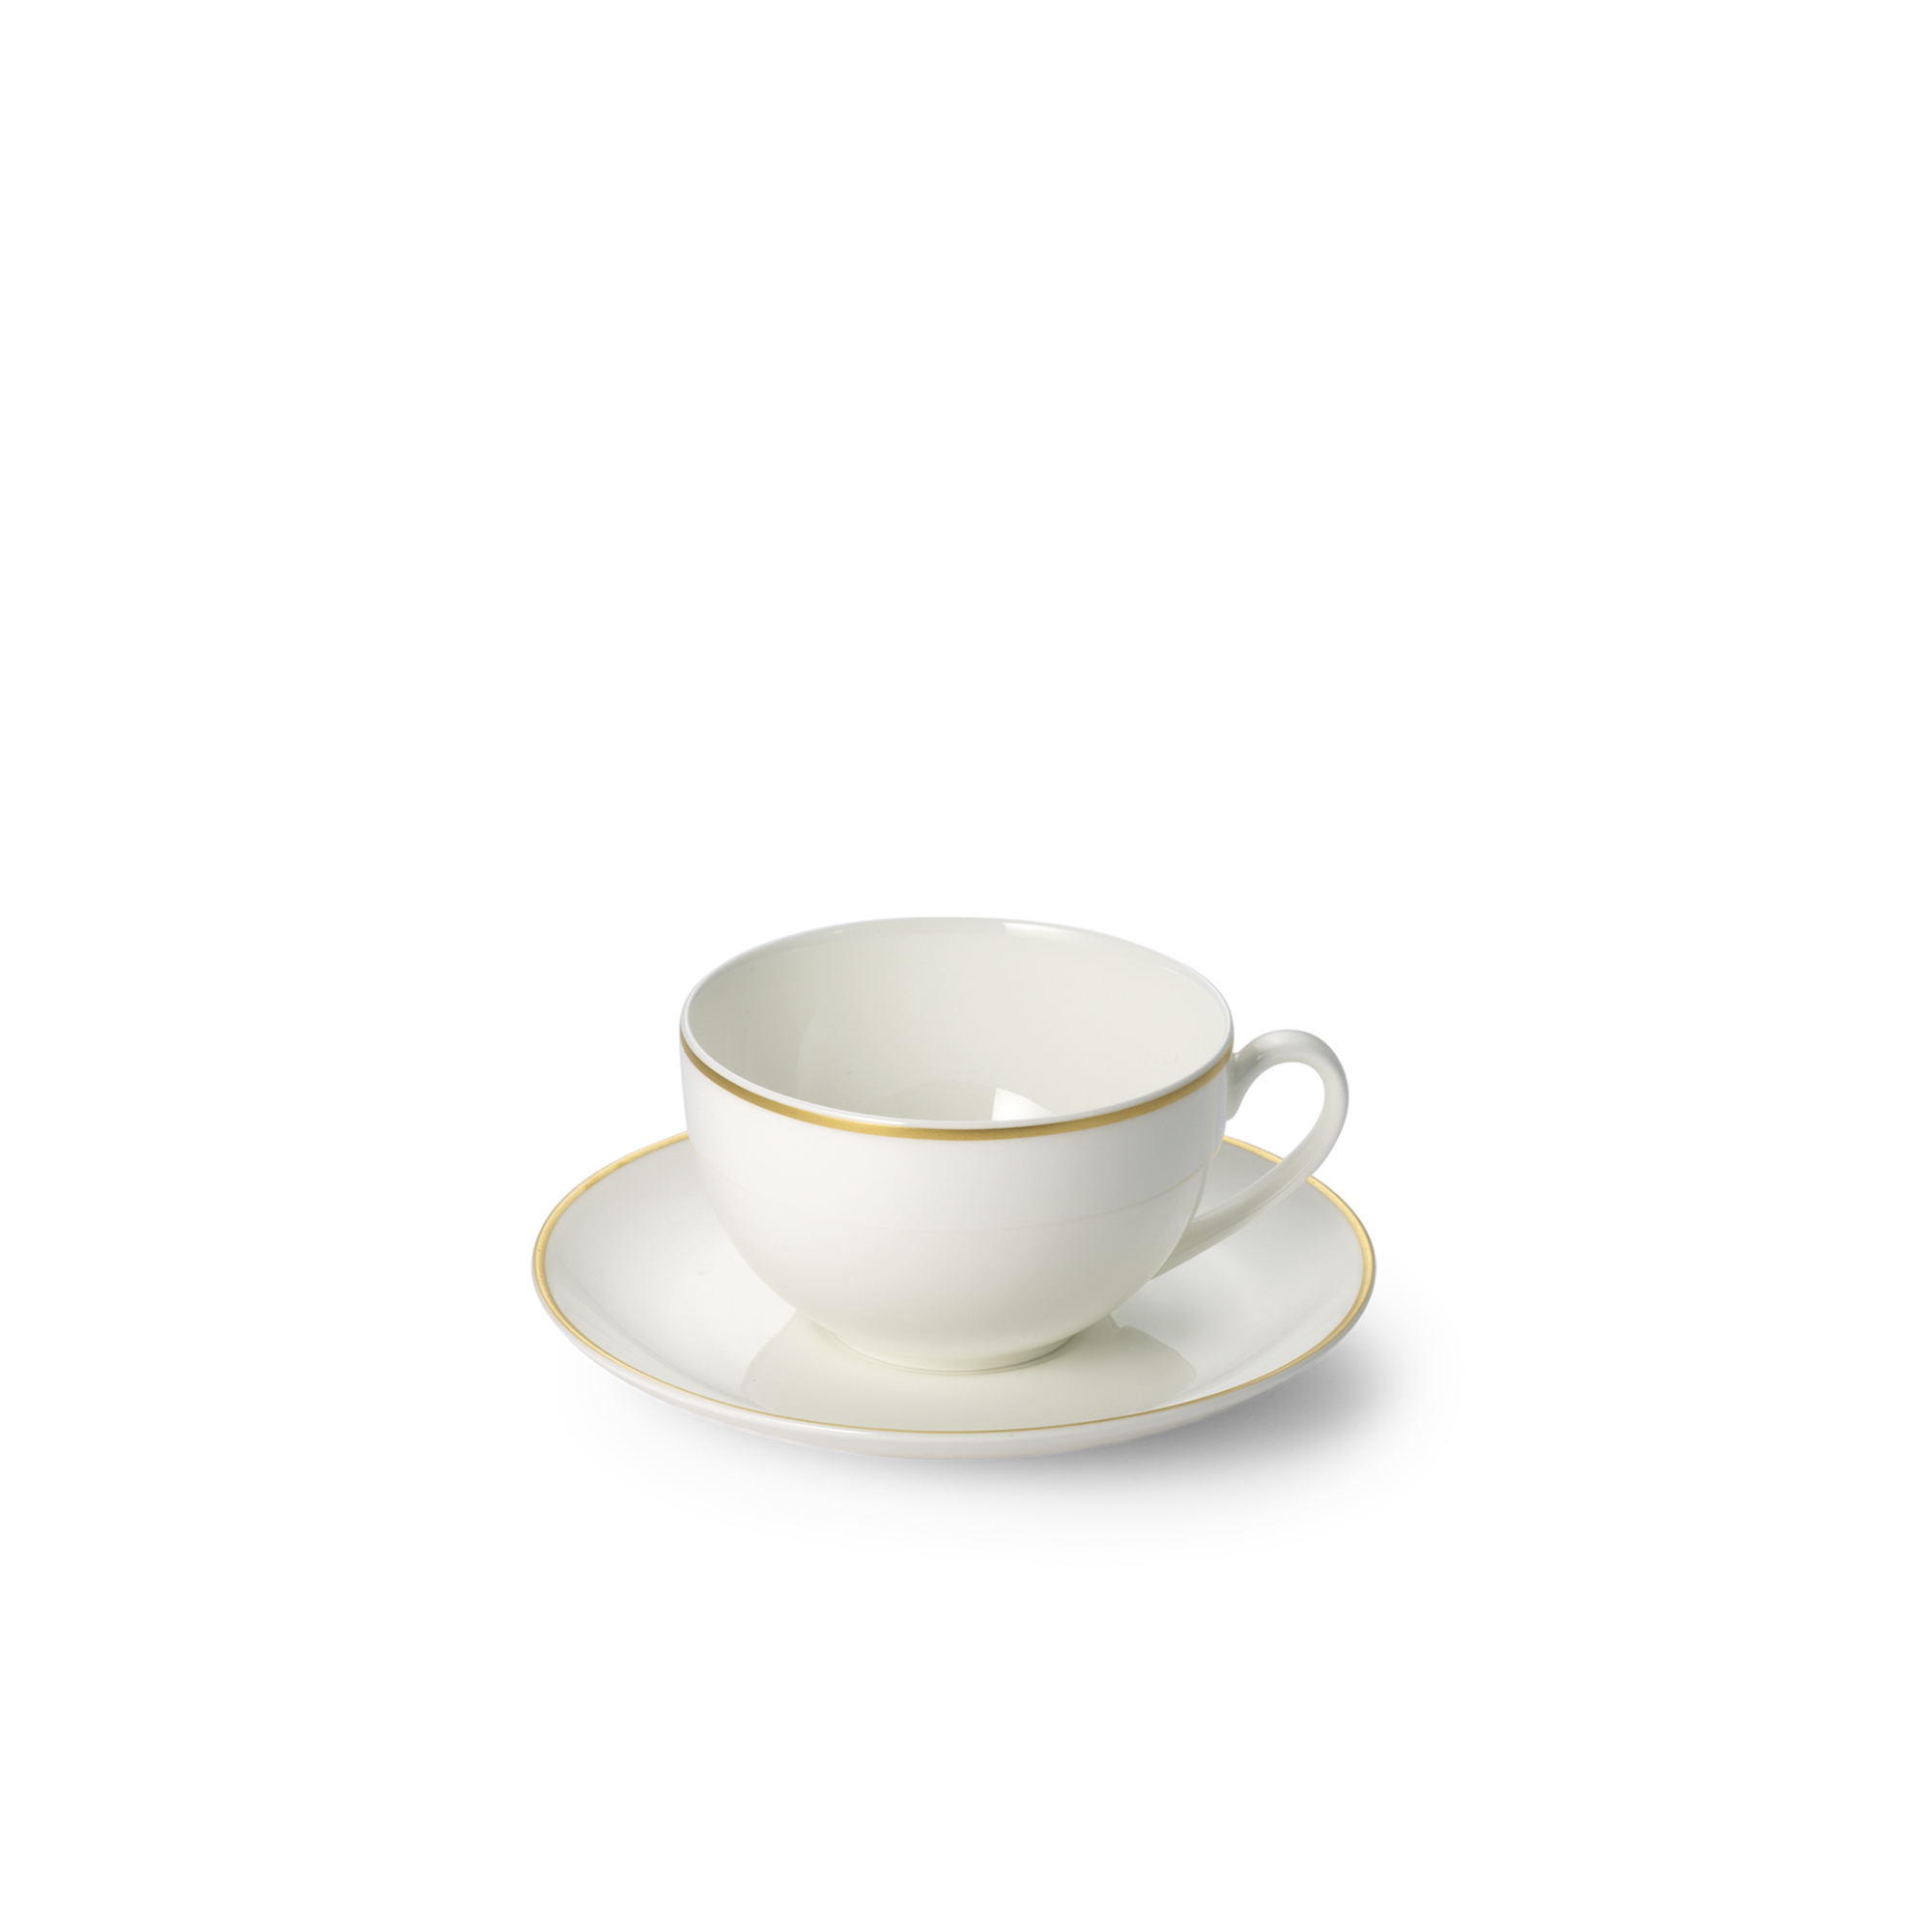 Golden Lane espresso cup